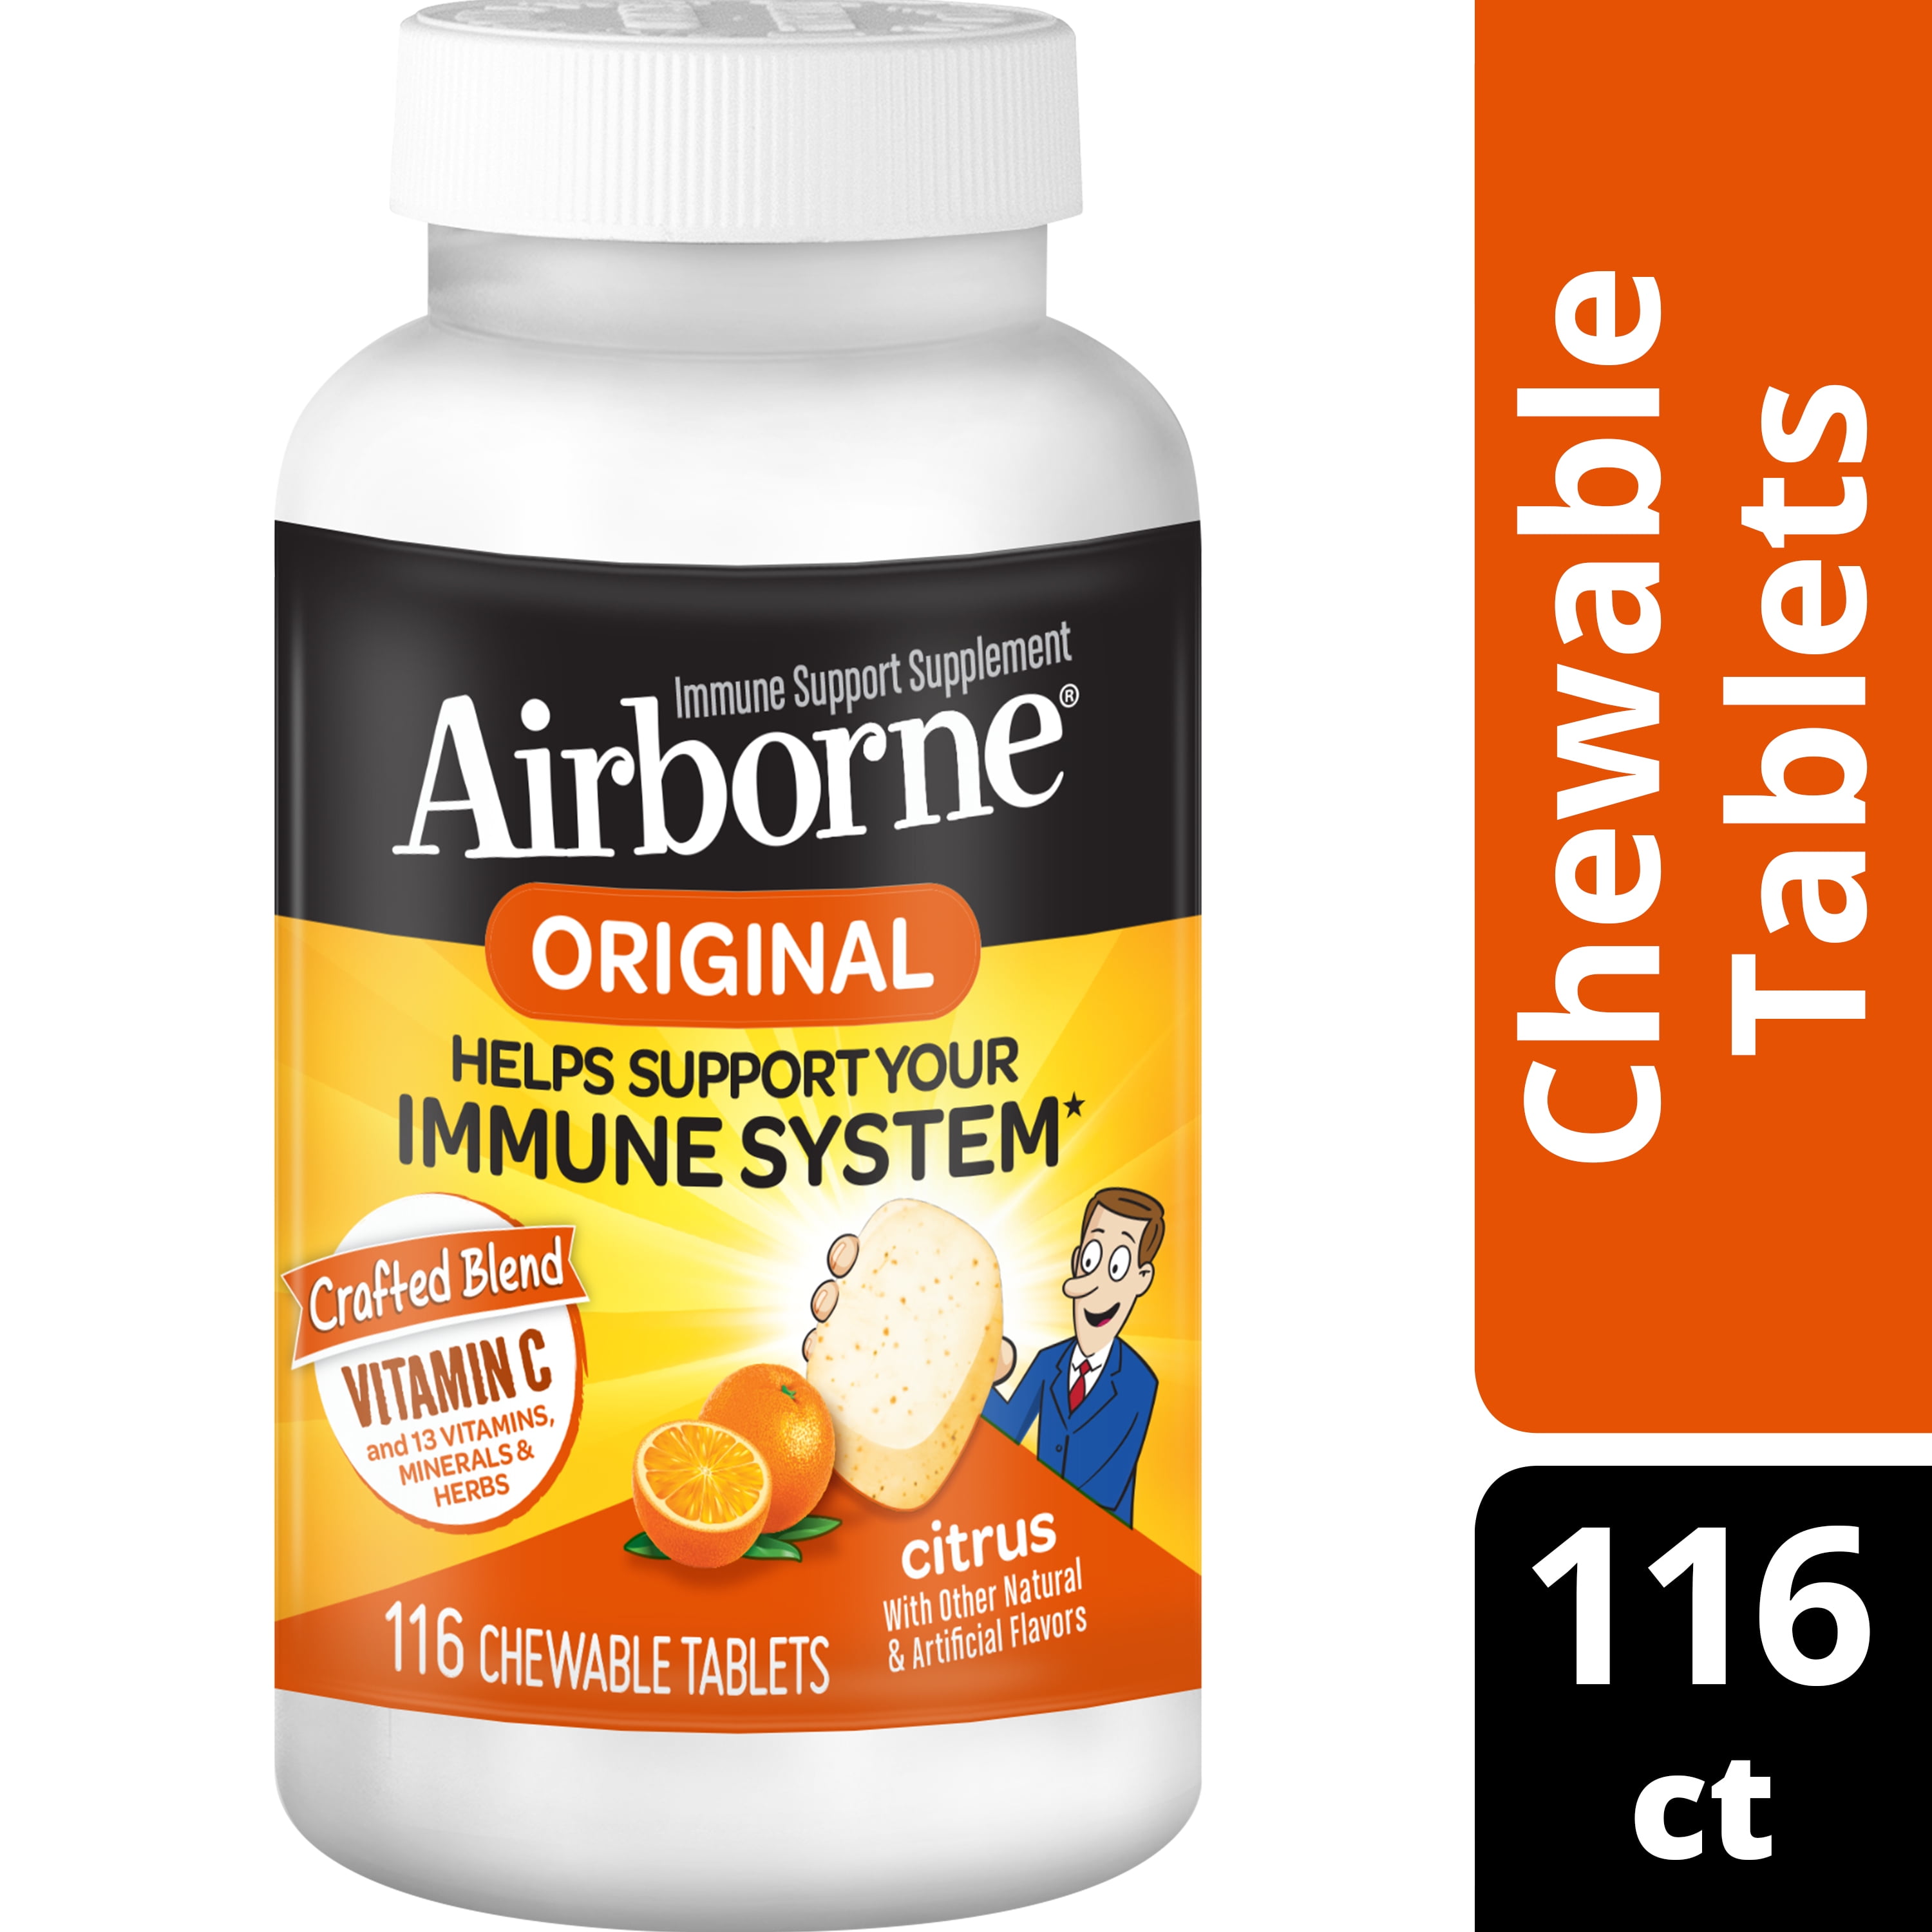 Airborne Citrus Chewable Tablets 116 Count 1000mg Of Vitamin C Immune Support Supplement Walmart Com Walmart Com